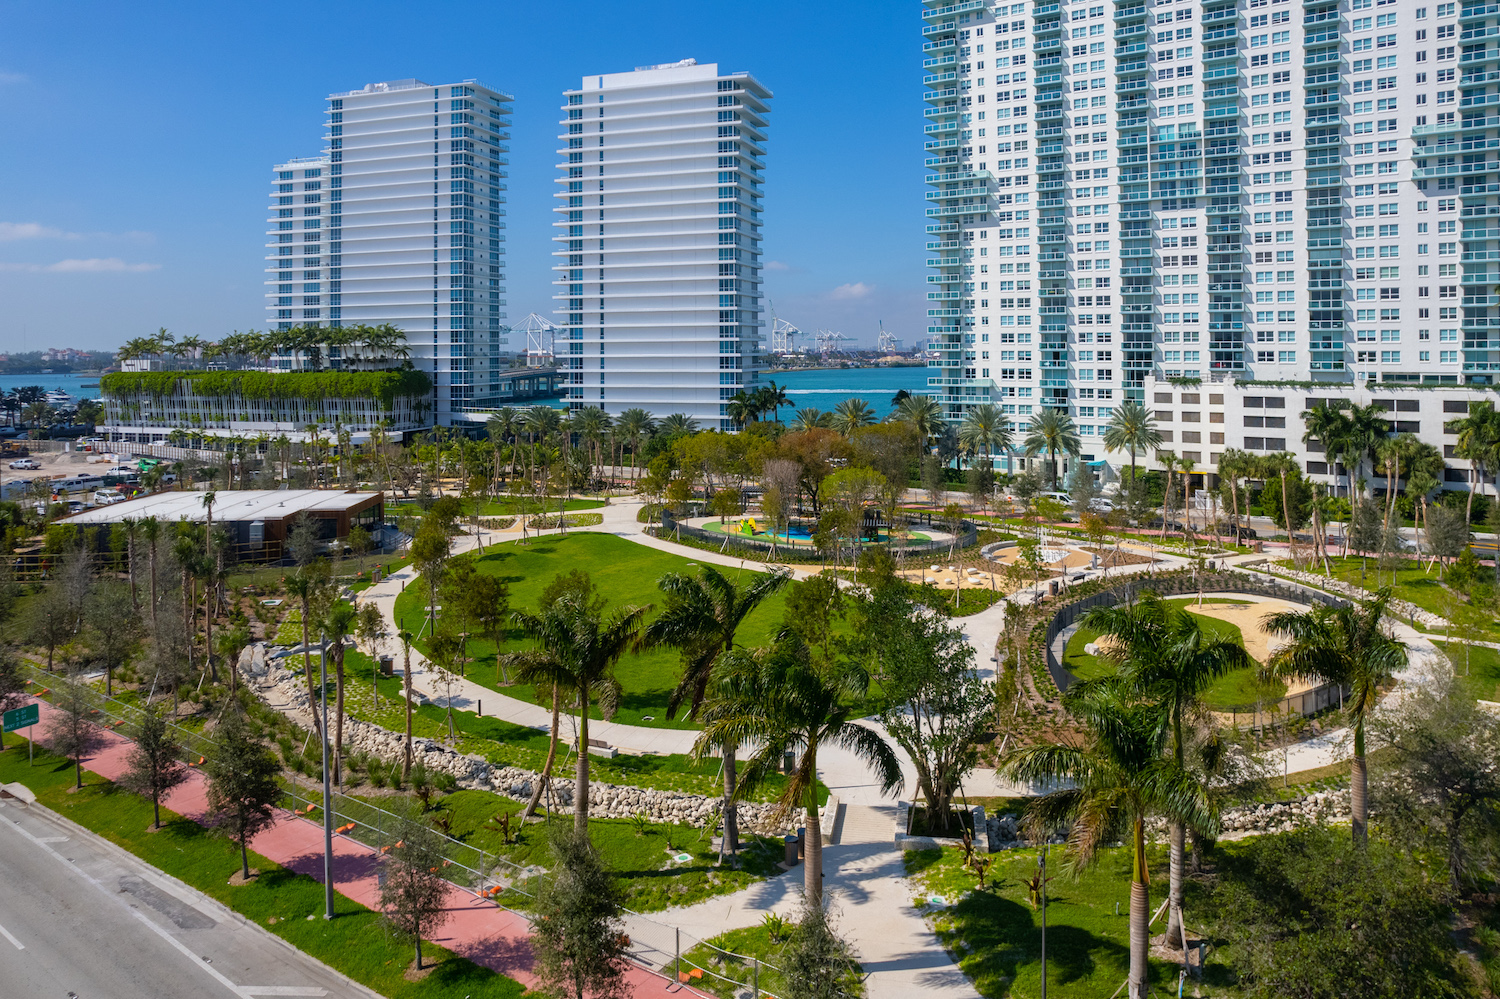 Miami's Club Space launches massive open-air venue, Space Park